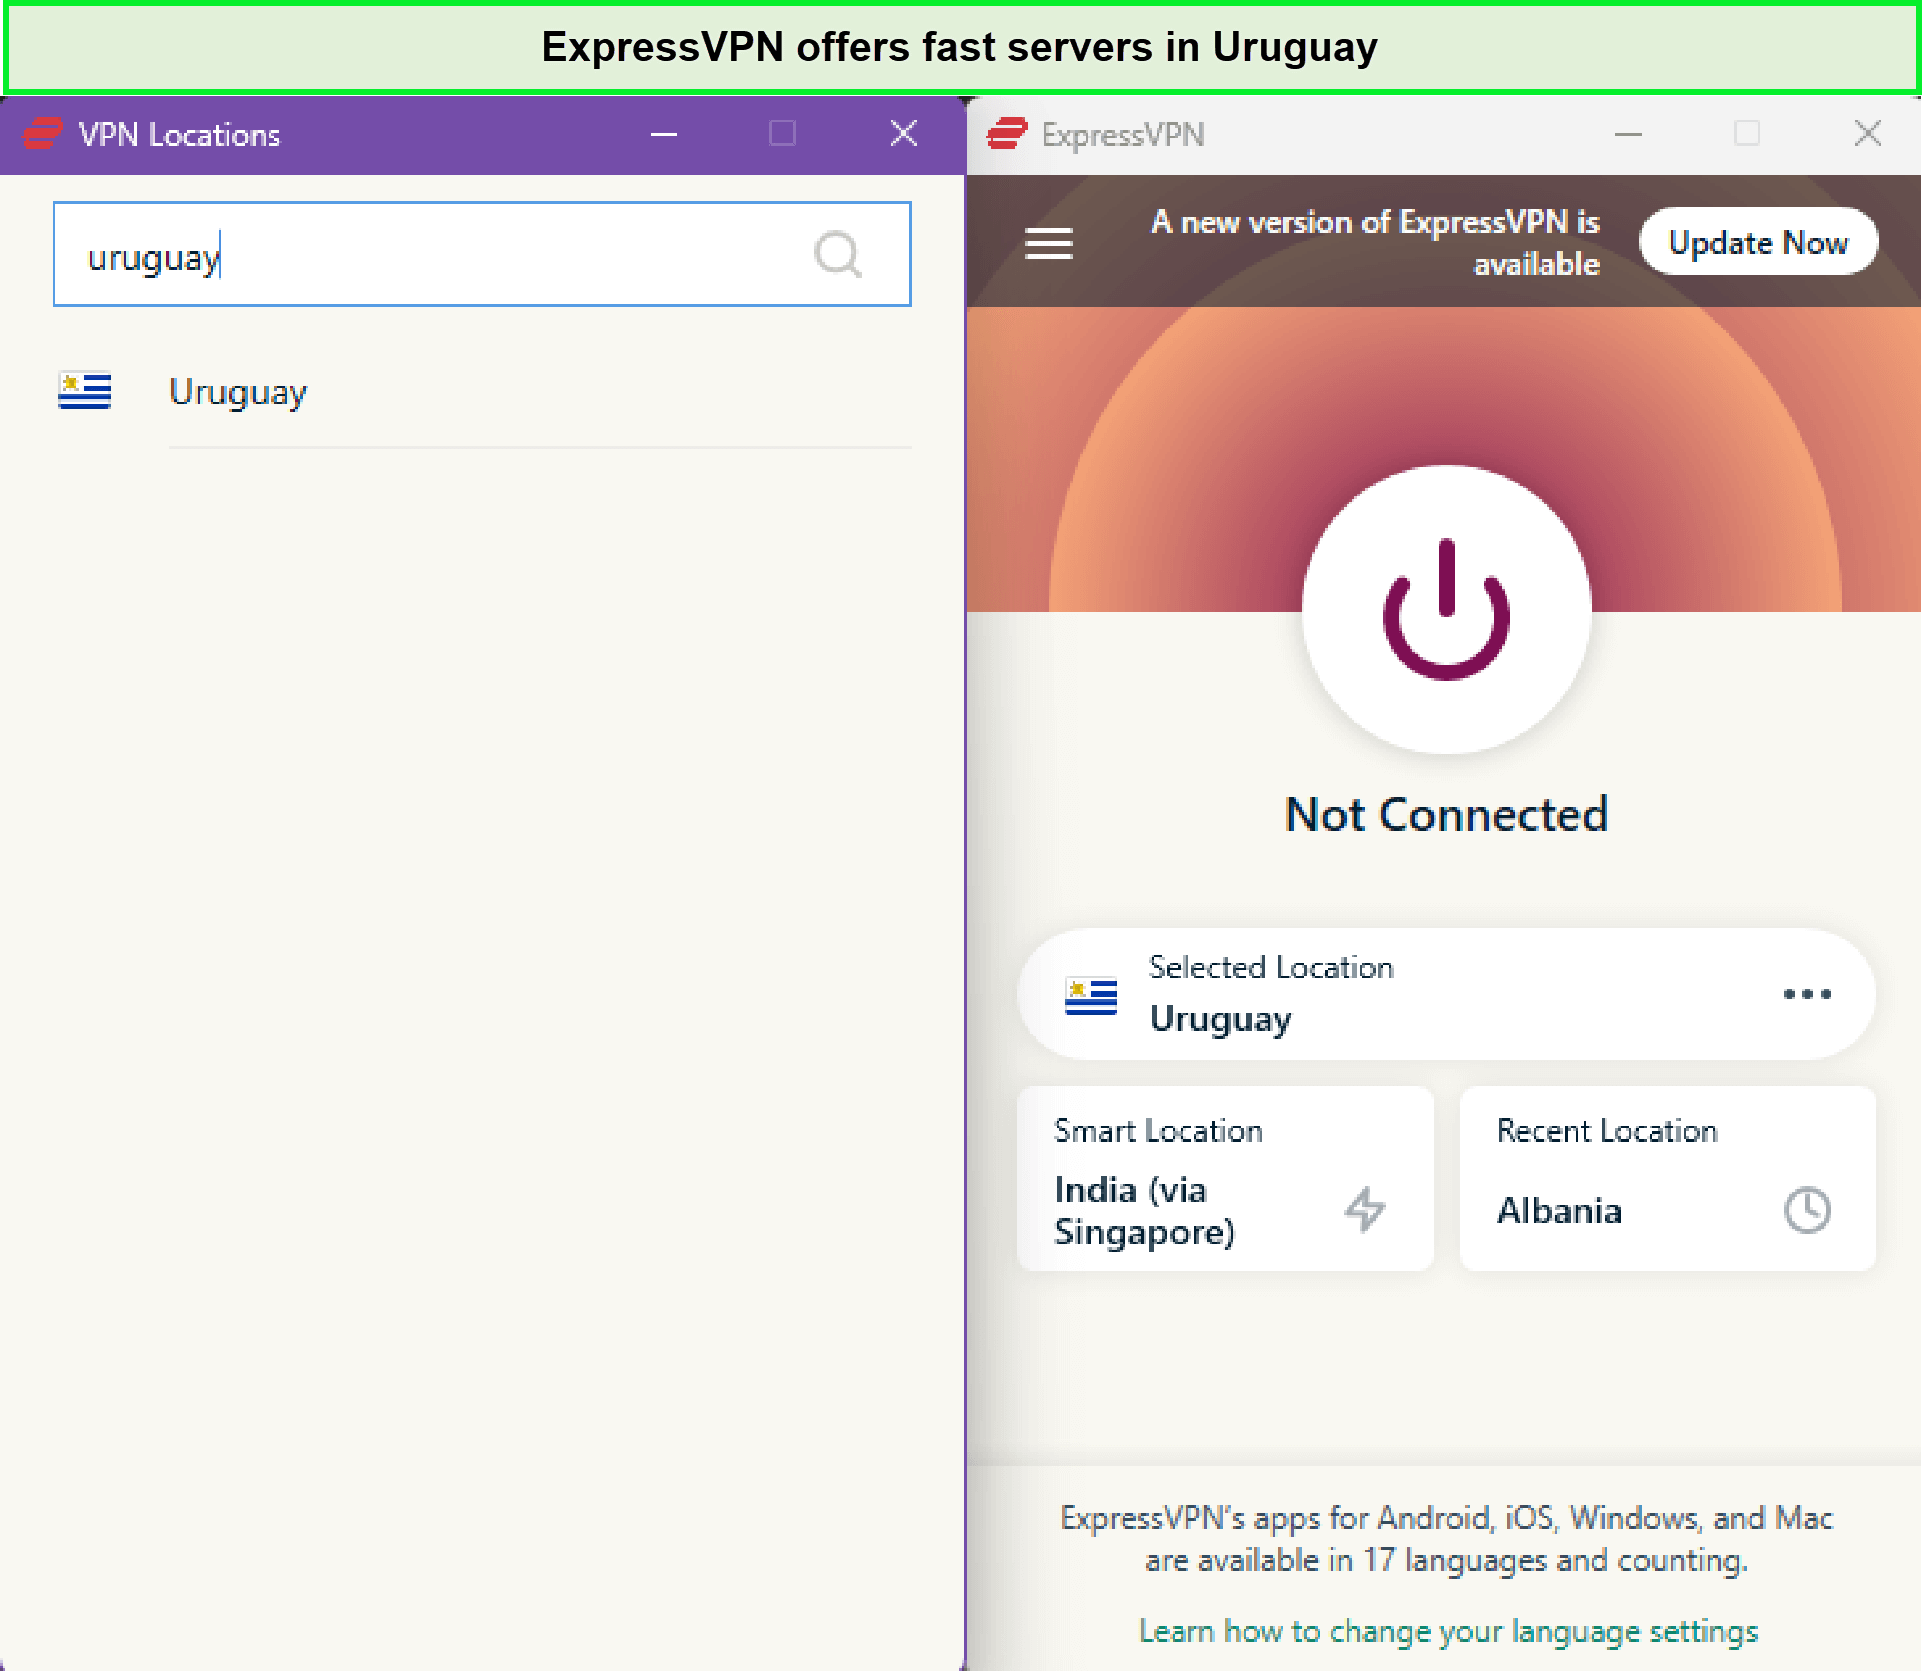 expressvpn-uruguay-servers-For Singaporean Users